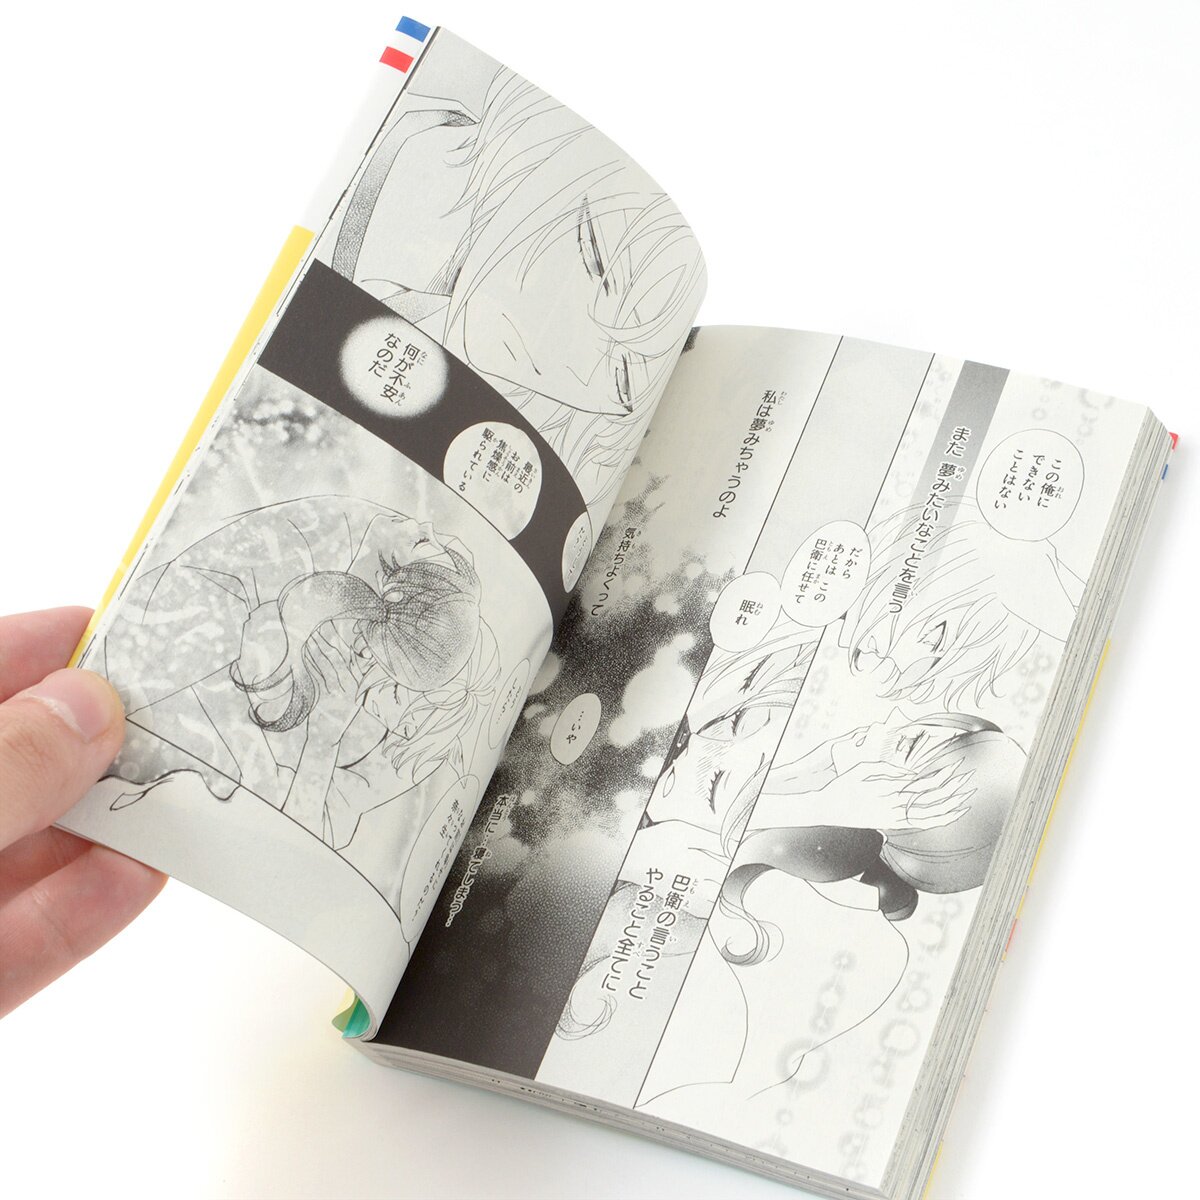 Kamisama Kiss, Vol. 24, Book by Julietta Suzuki, Official Publisher Page